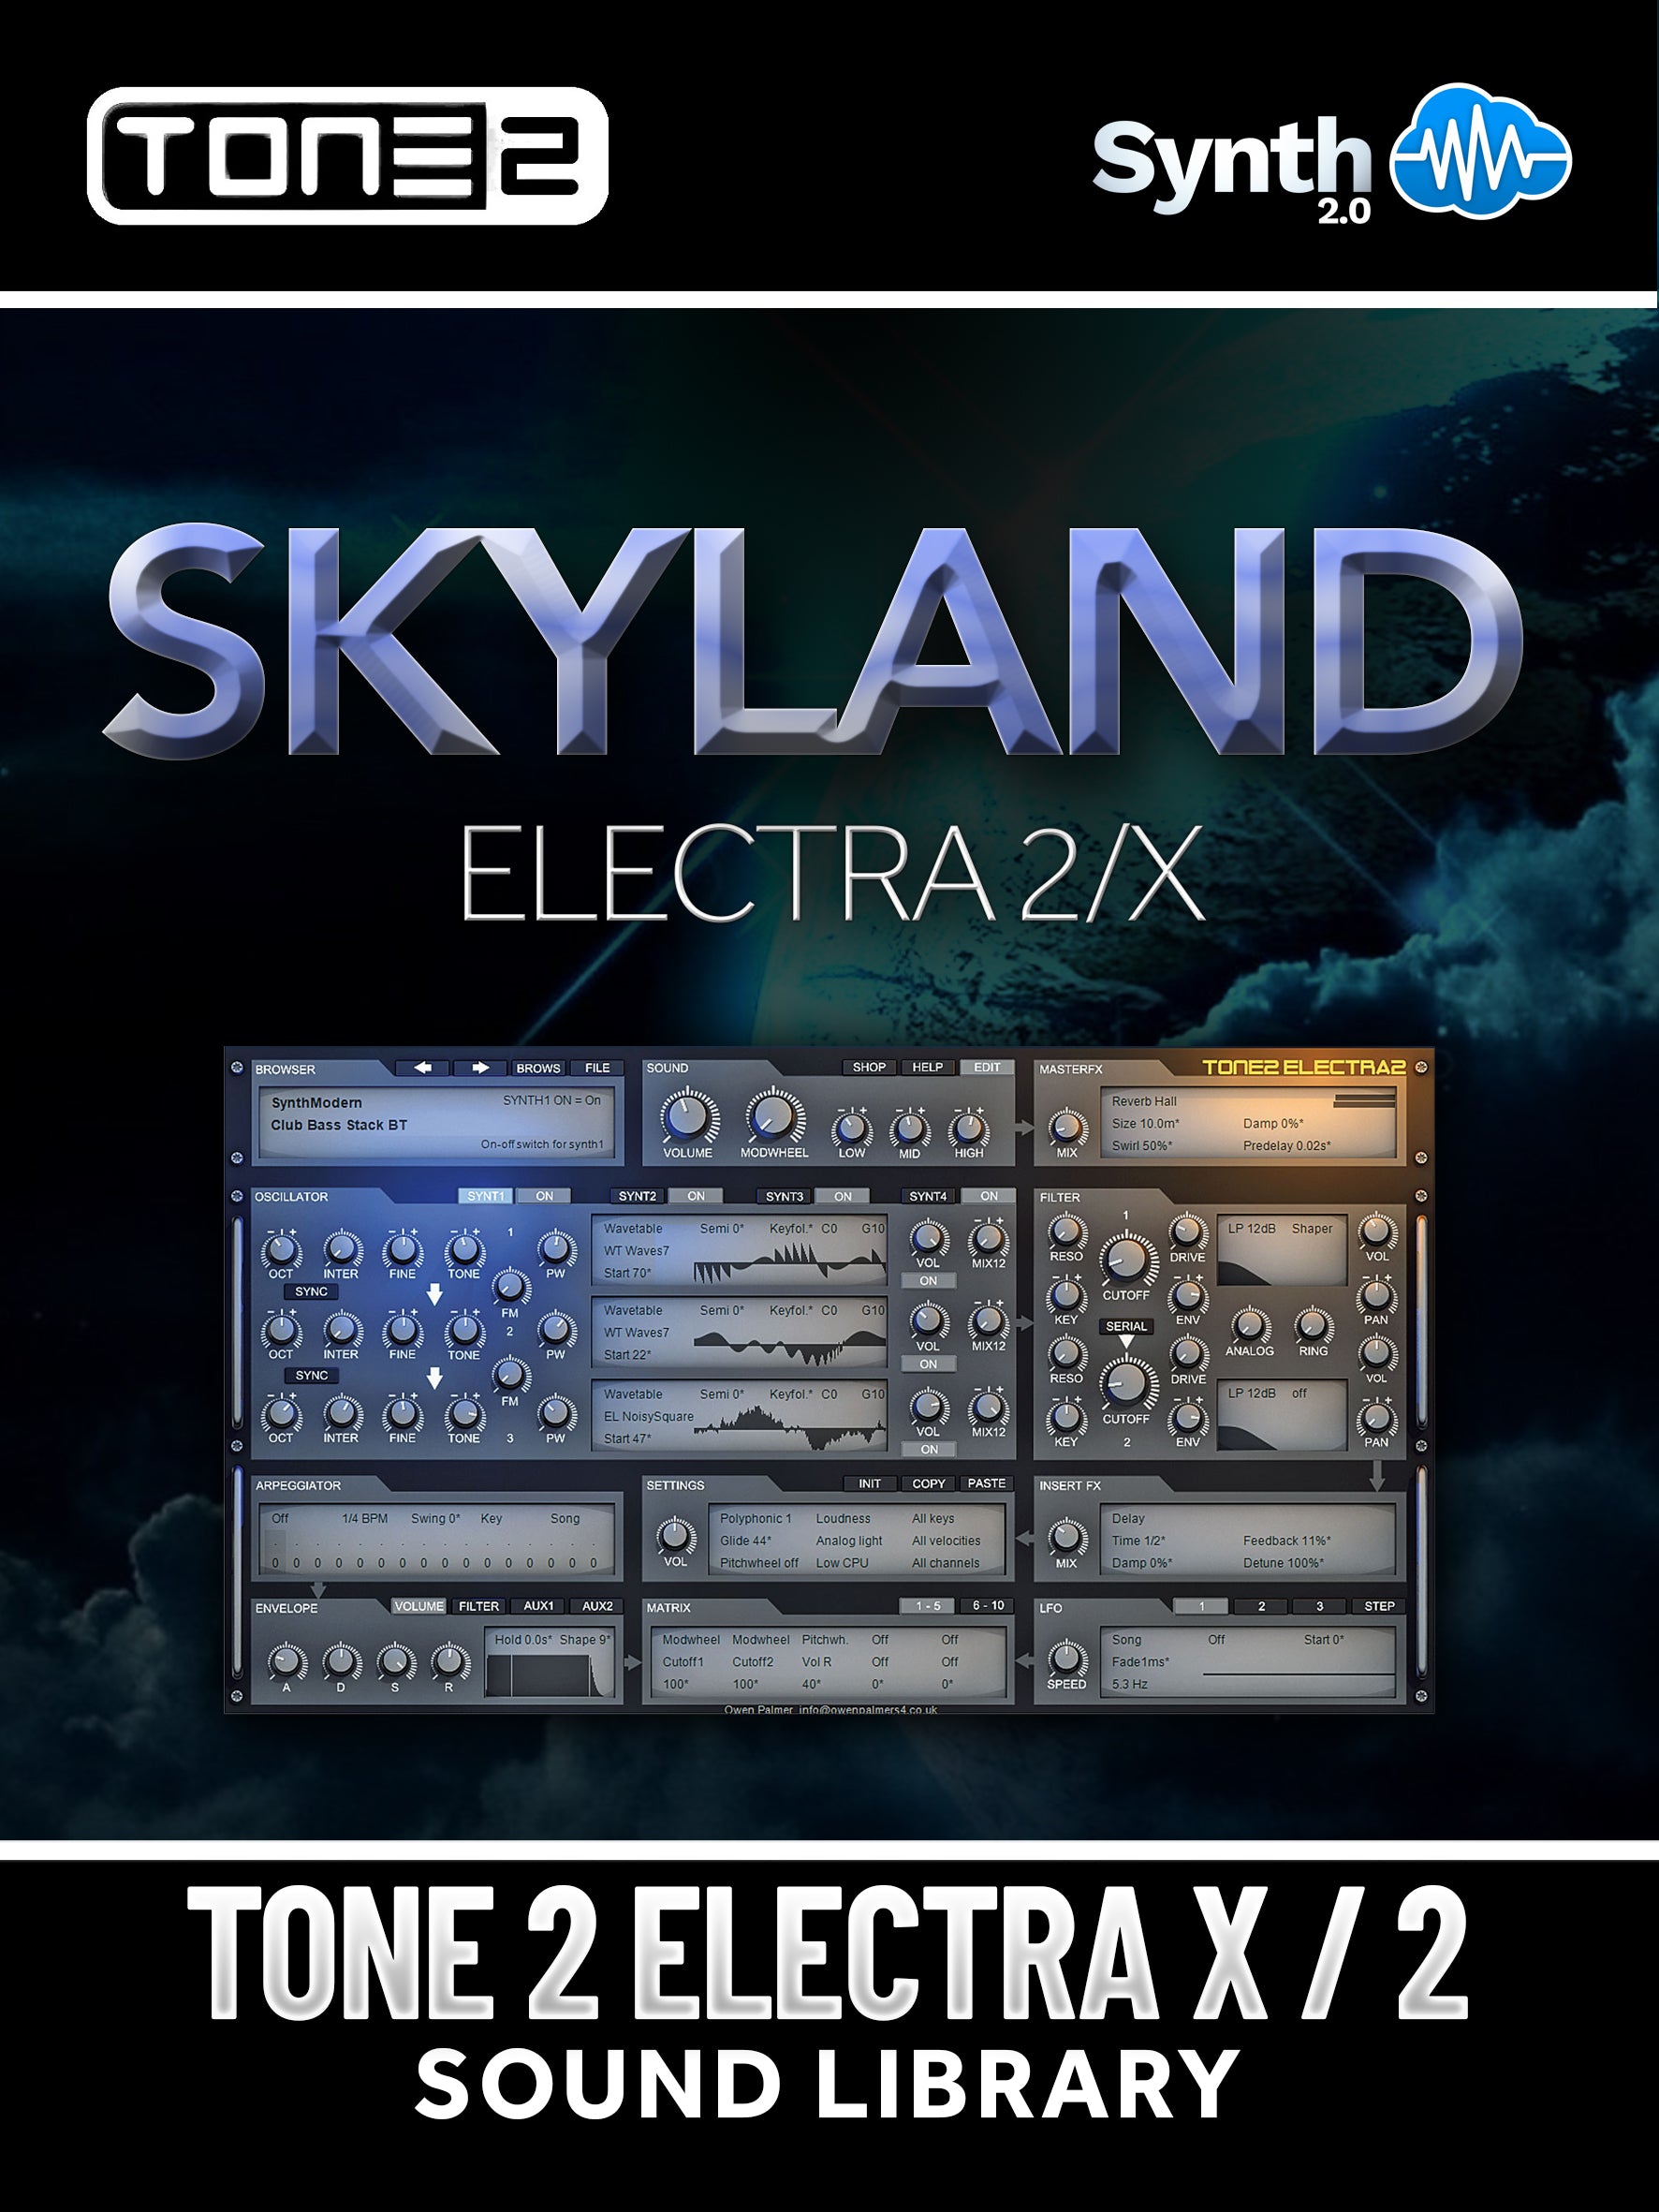 SCL145 - Electra X / 2 Skyland - Tone 2 Electra X / 2 ( 40 presets )